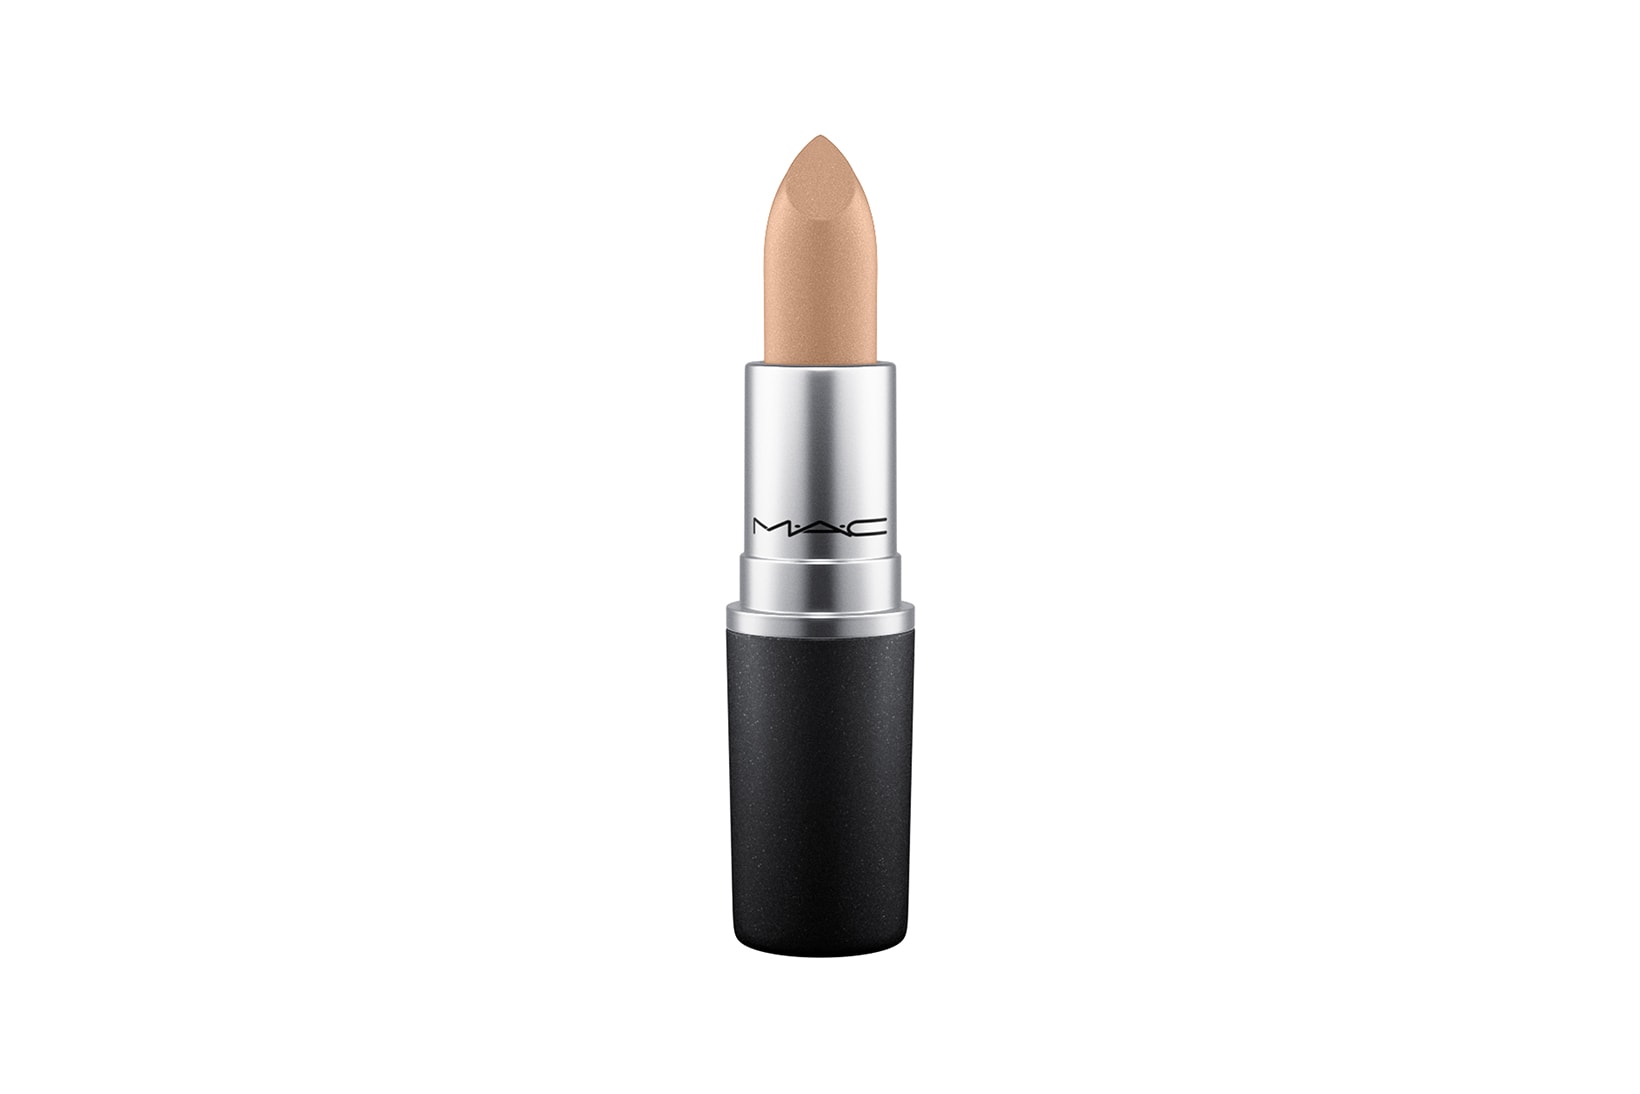 mac national lipstick day 2019 free cb96 us stores makeup beauty cosmetics